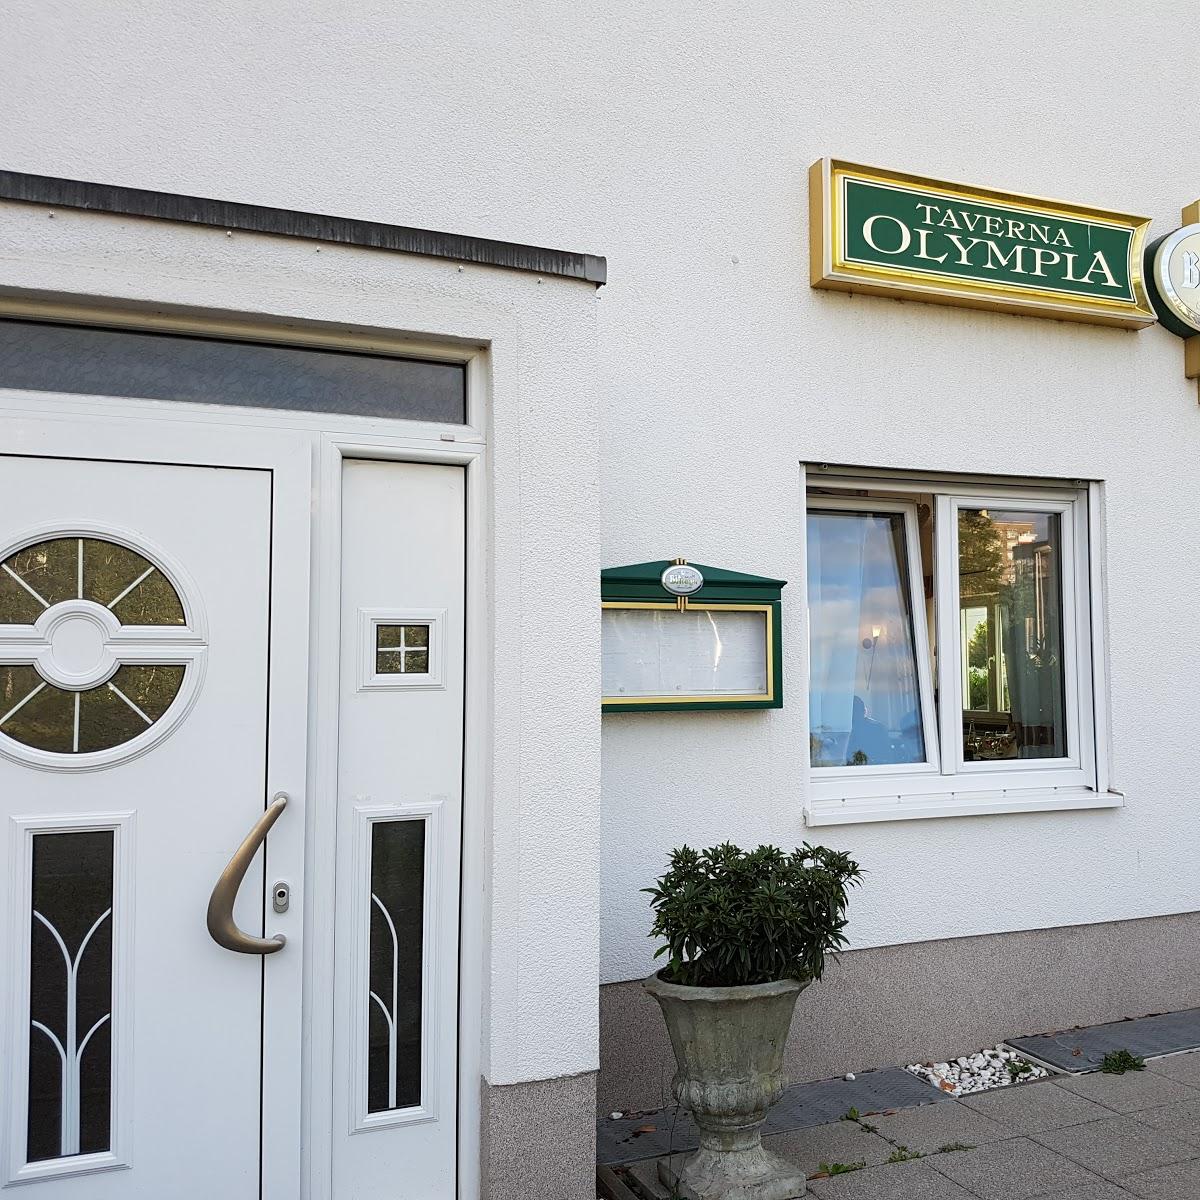 Restaurant "Taverna Olympia" in Darmstadt